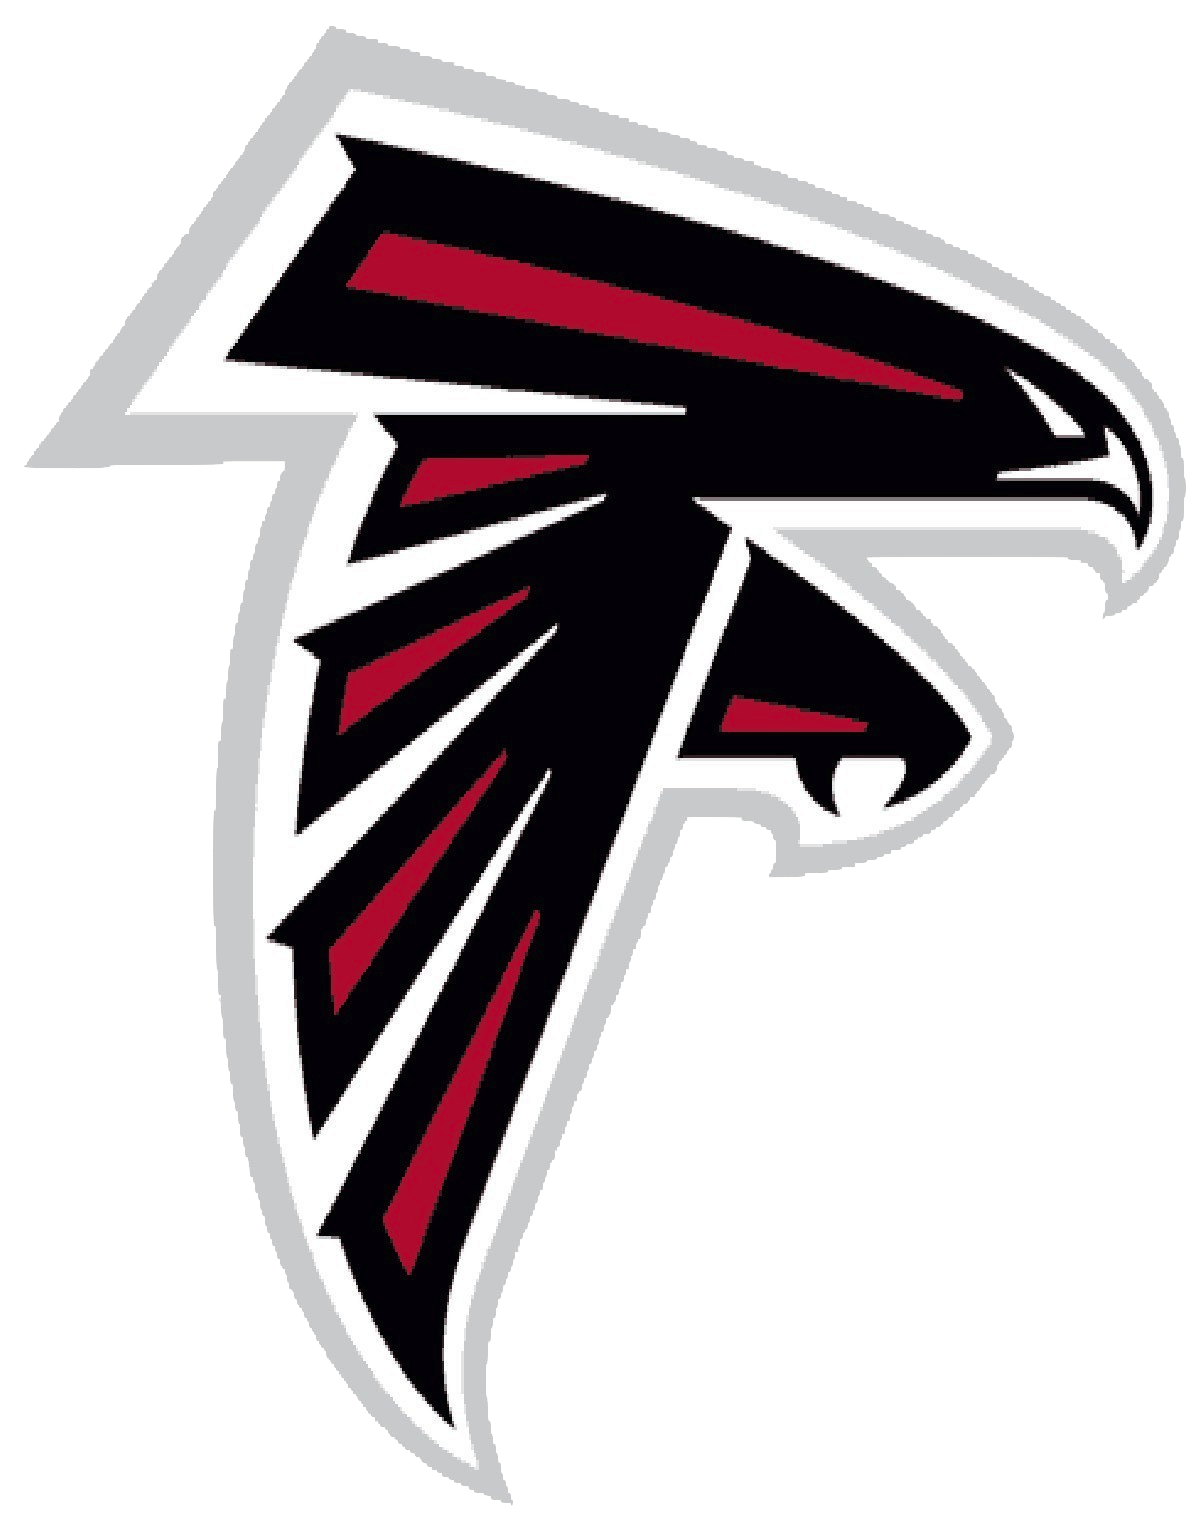 Falcon Team Logo - images of the ATLANTA FALCONS football logos | Atlanta Falcons ...